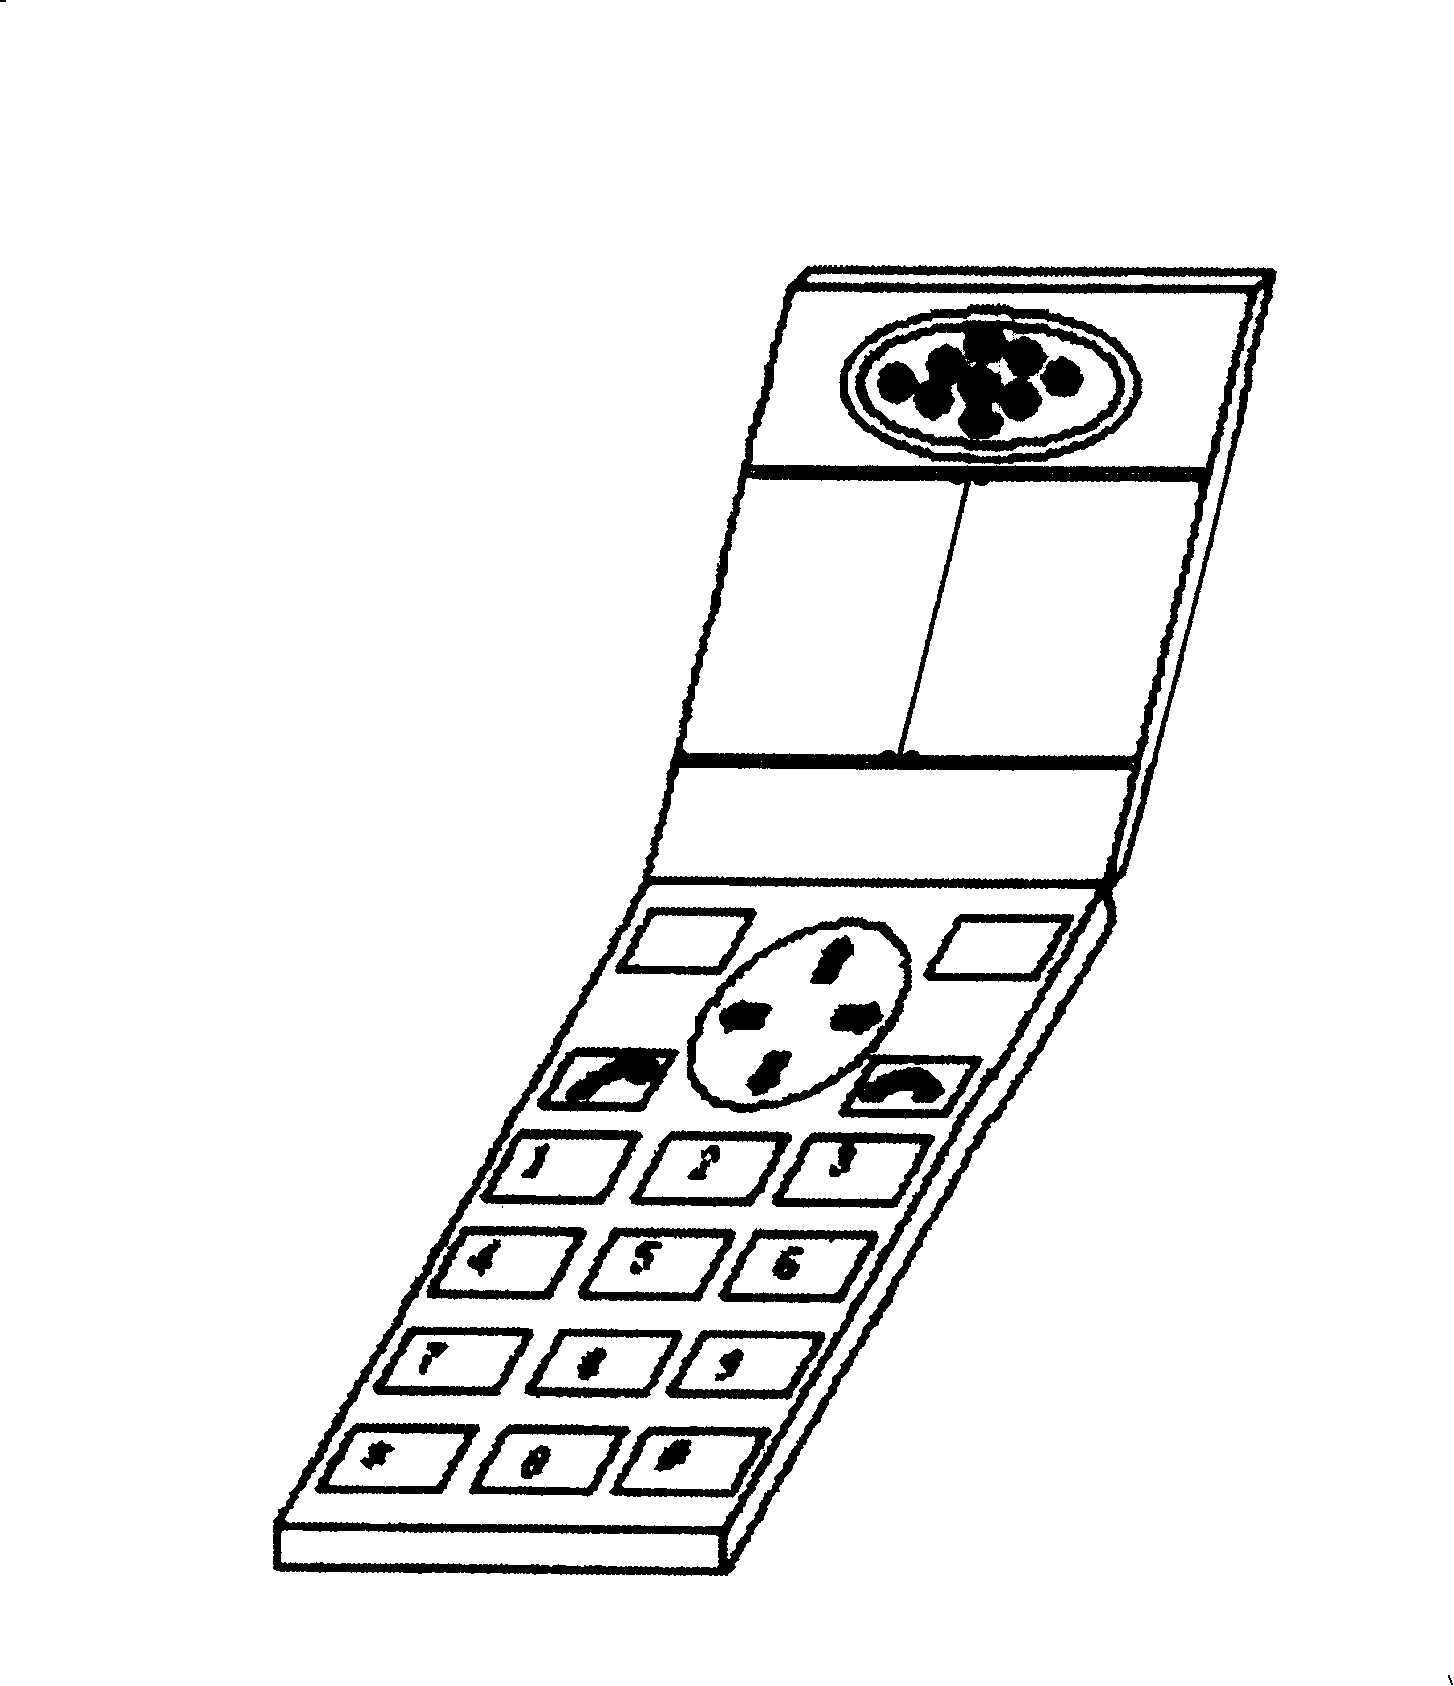 A foldable mobile communication terminal screen